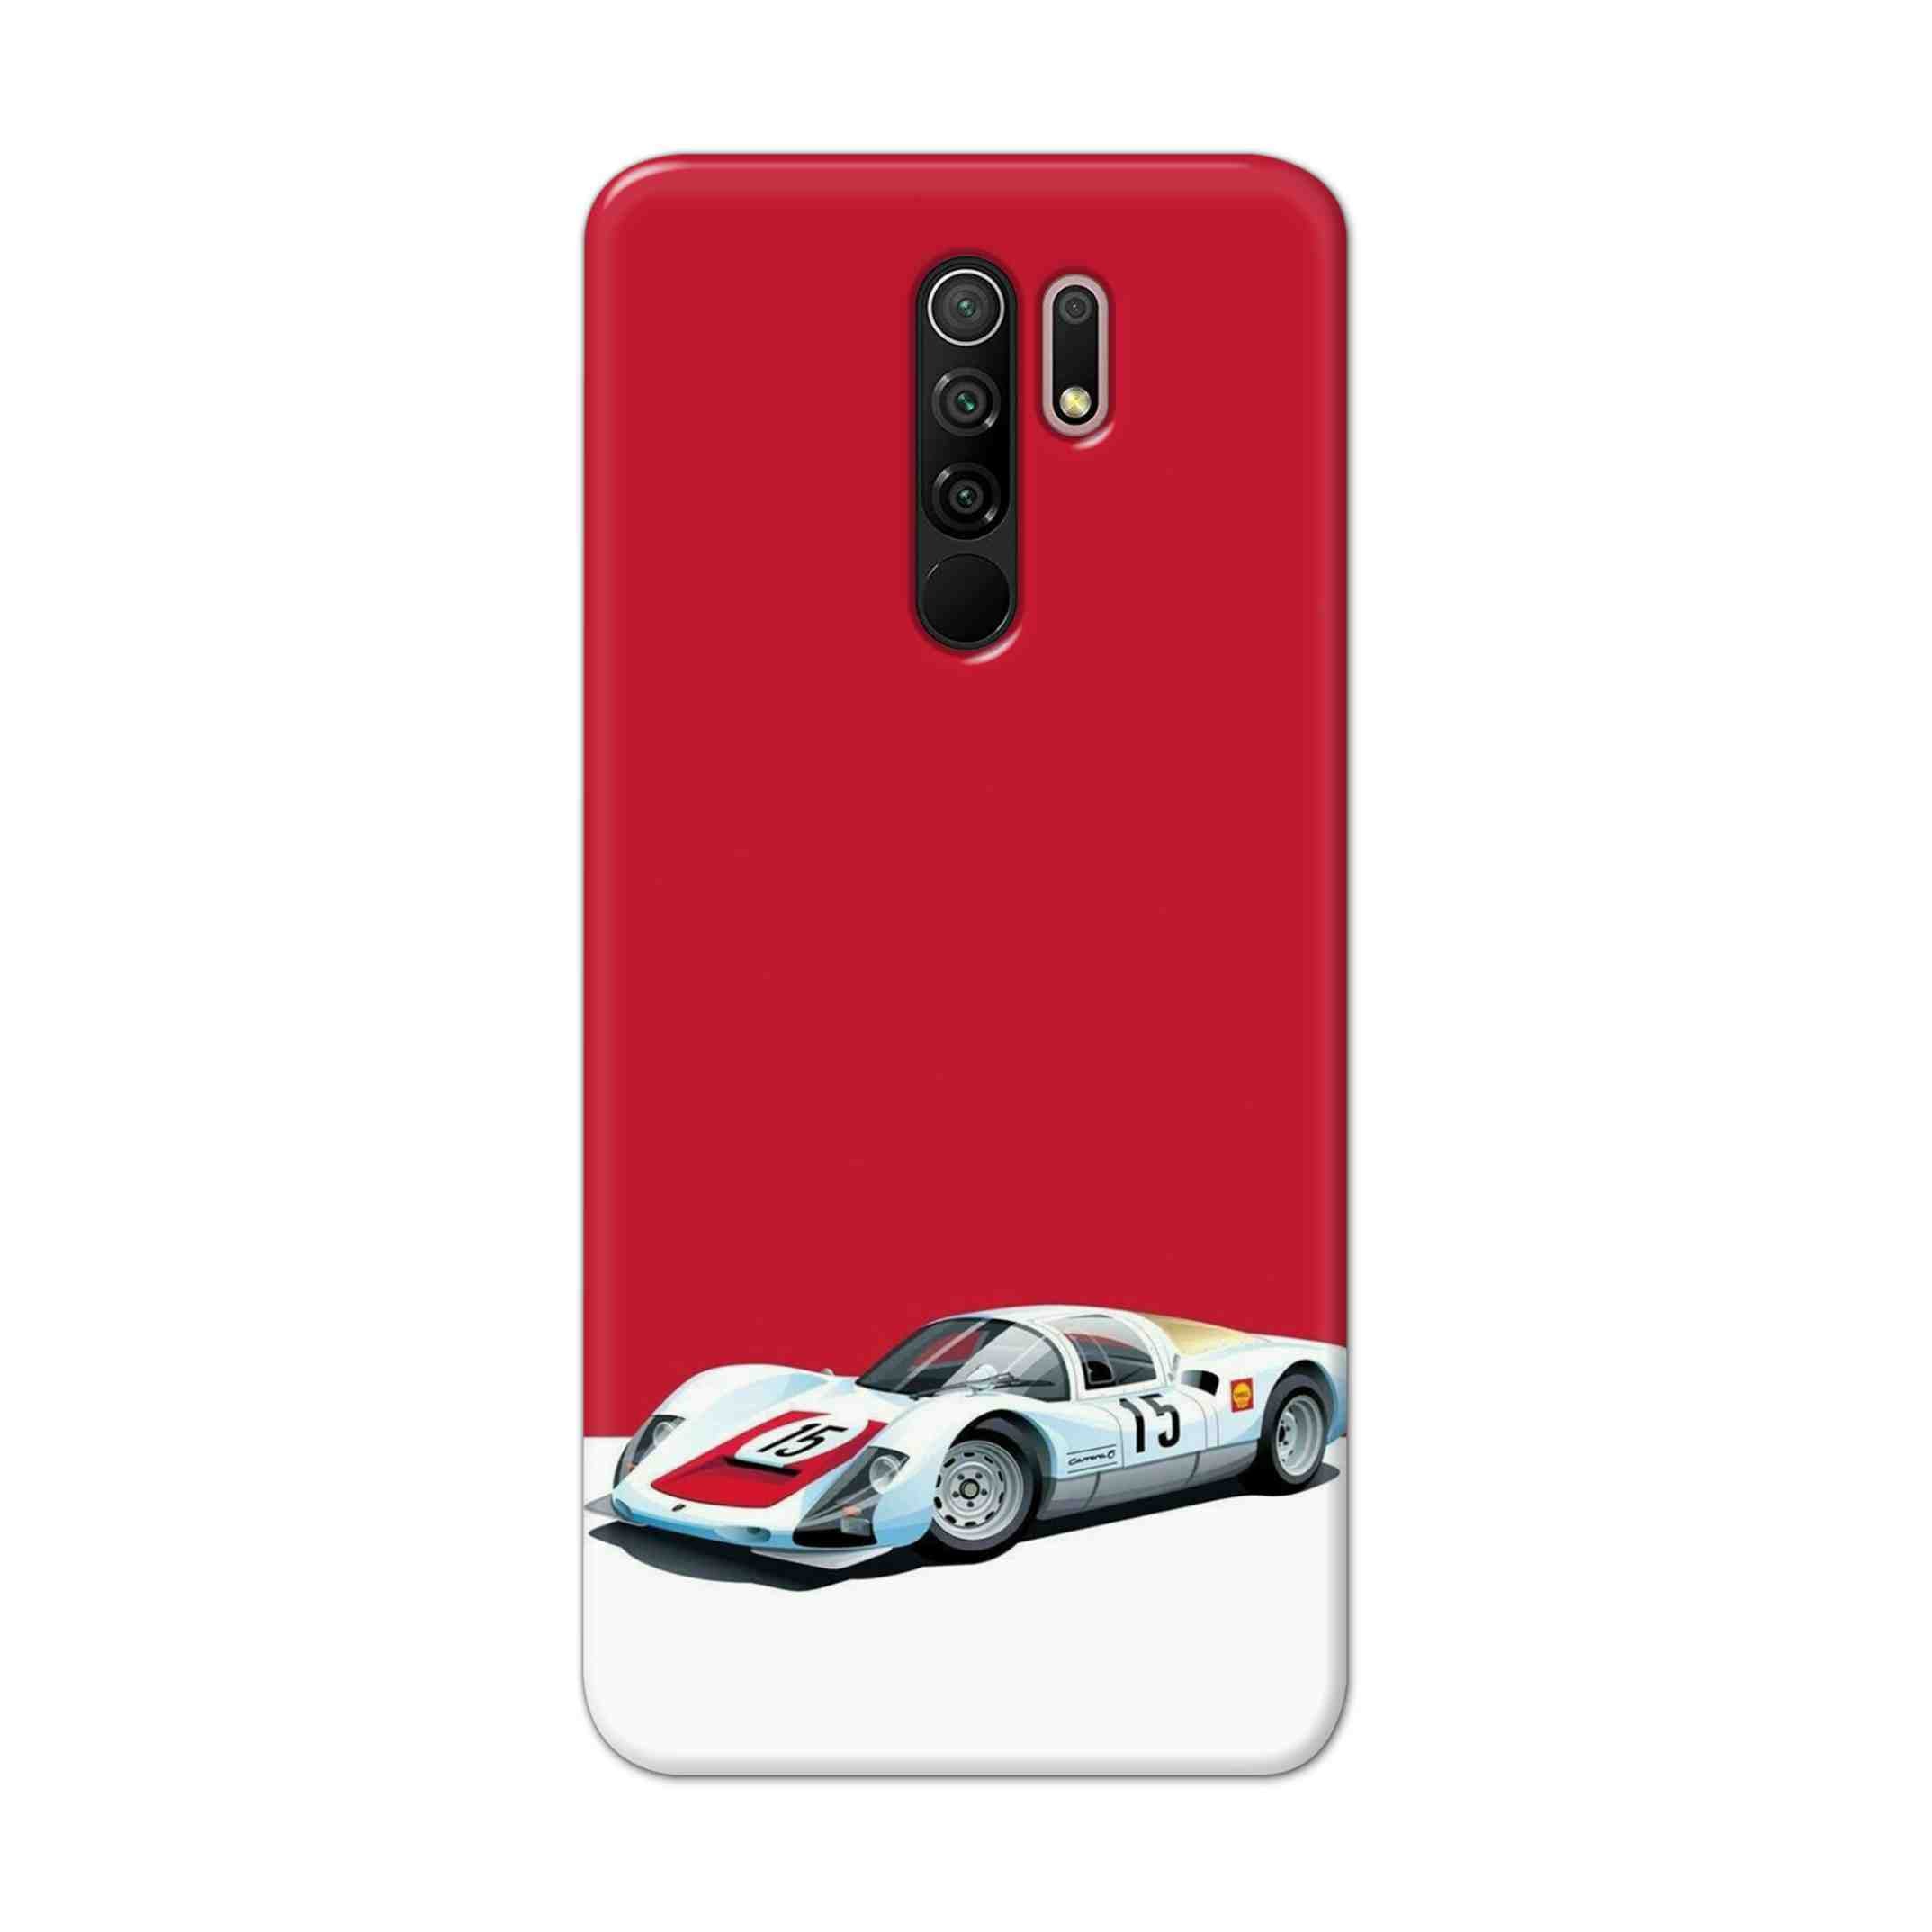 Buy Ferrari F15 Hard Back Mobile Phone Case Cover For Xiaomi Redmi 9 Prime Online